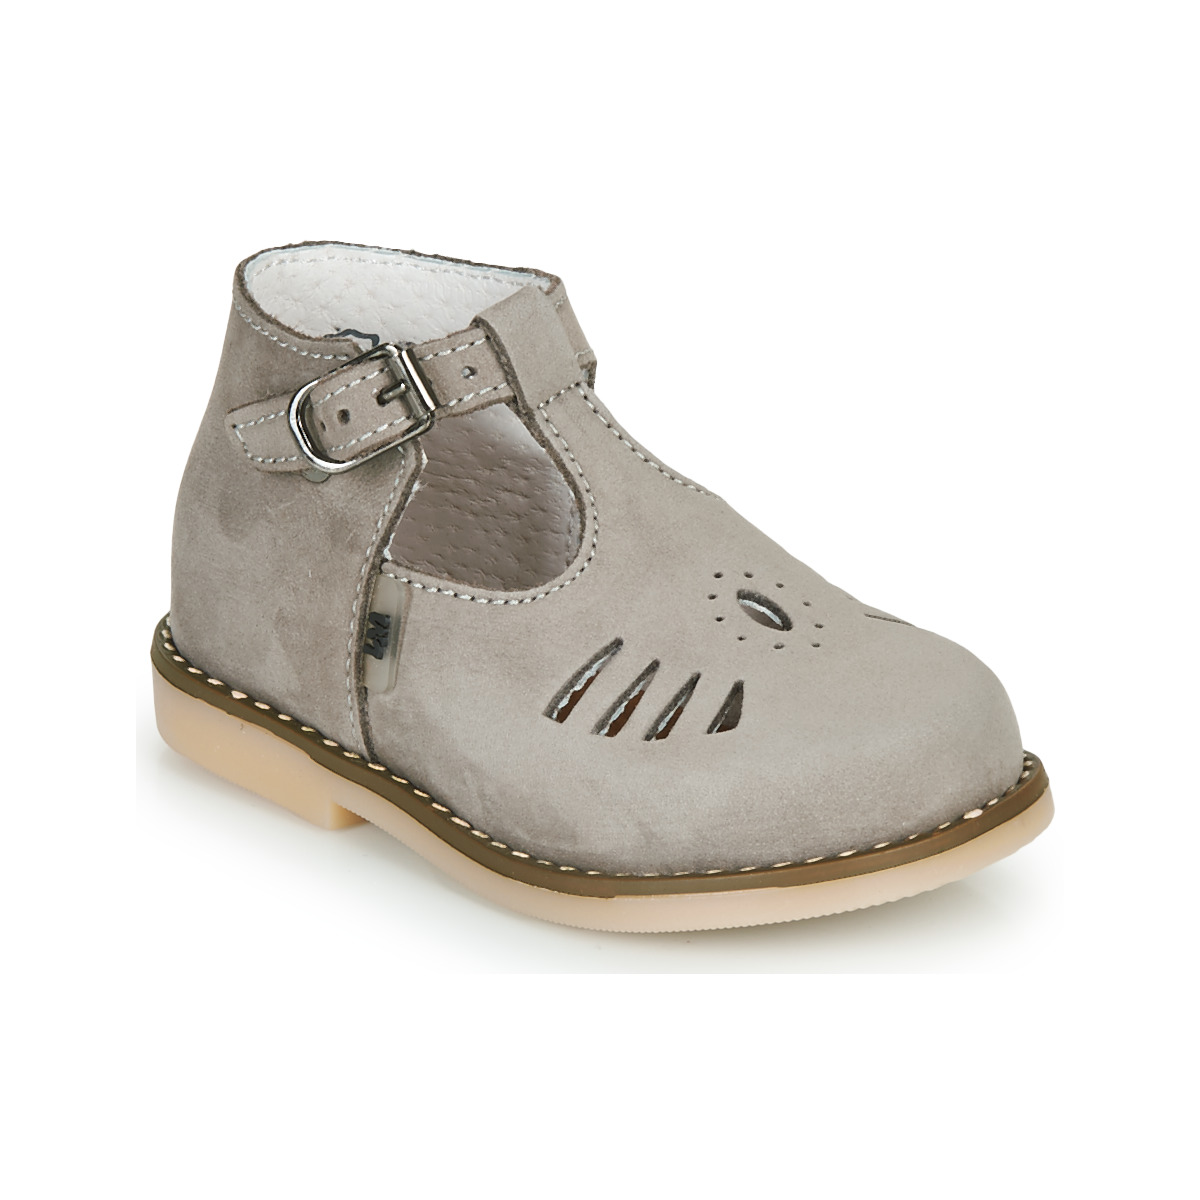 Shoes Children Sandals Little Mary SURPRISE Grey